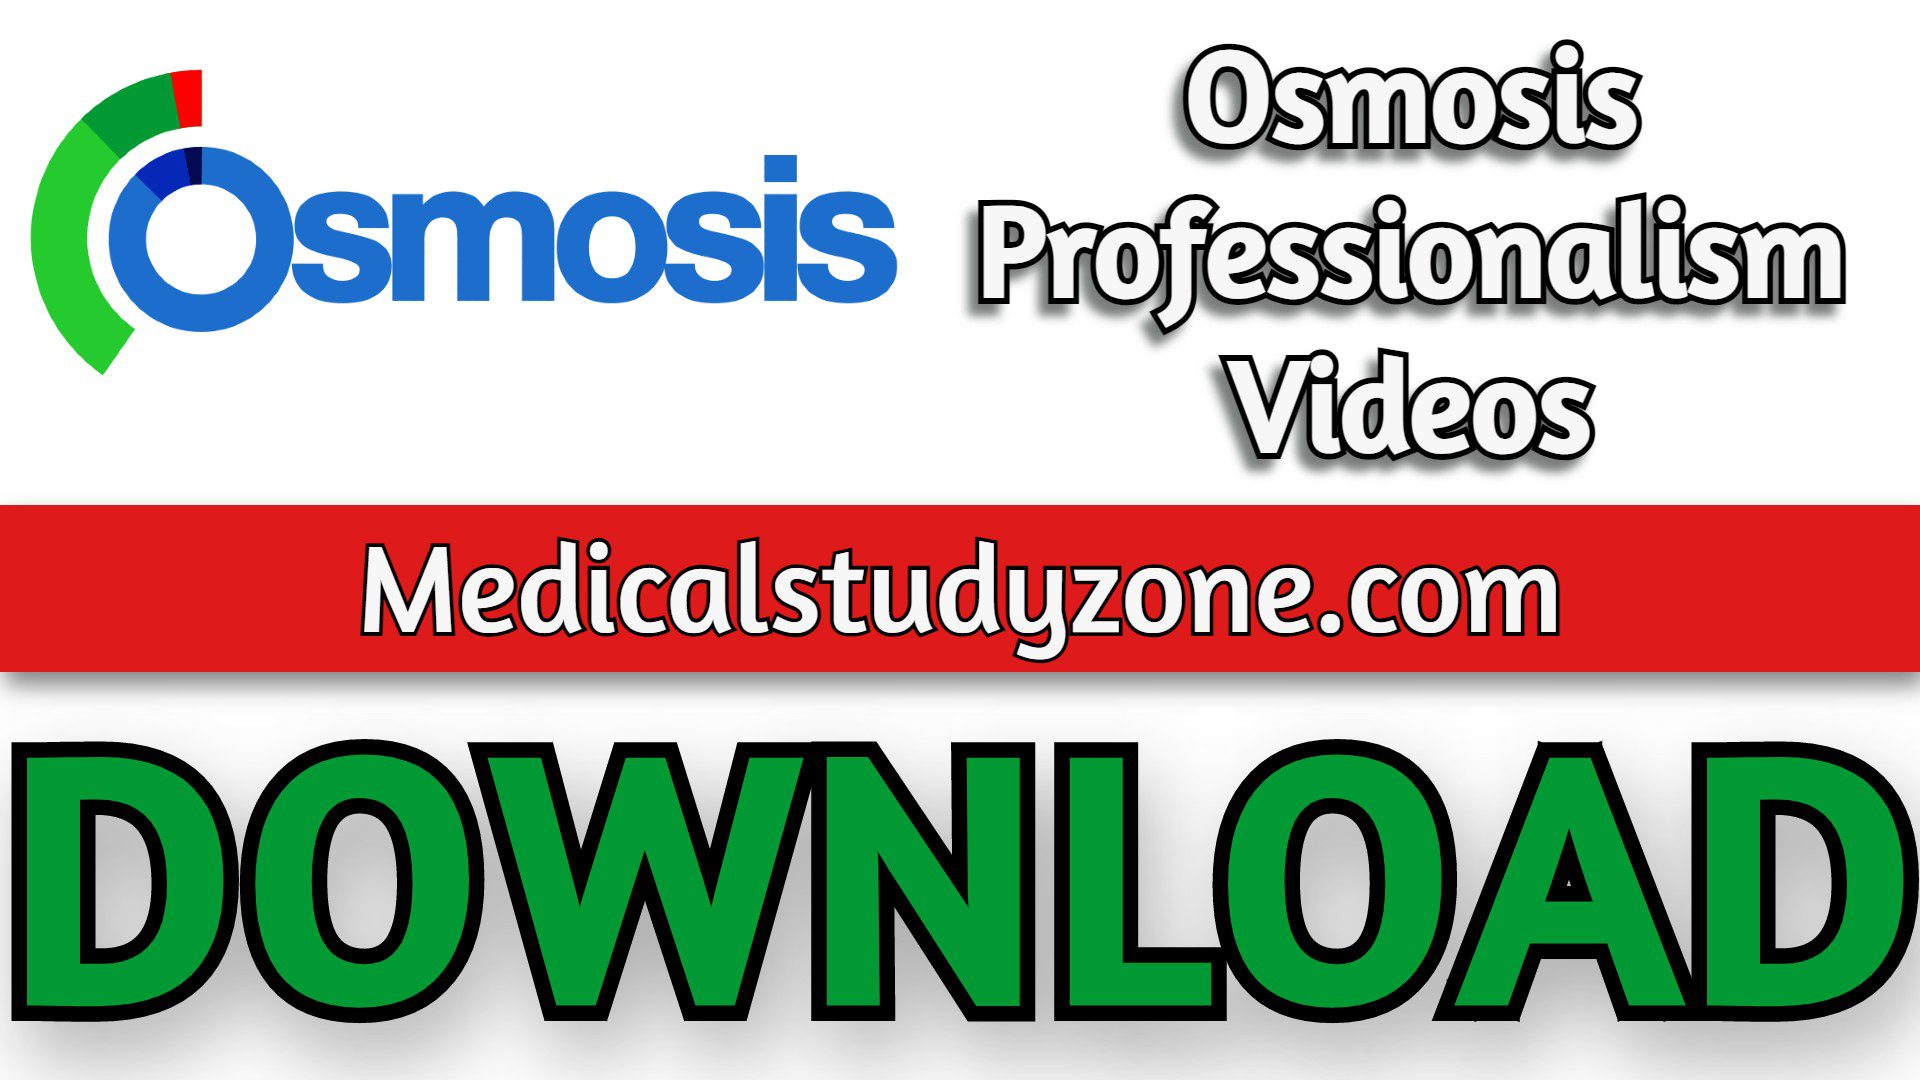 Osmosis Professionalism Videos 2023 Free Download